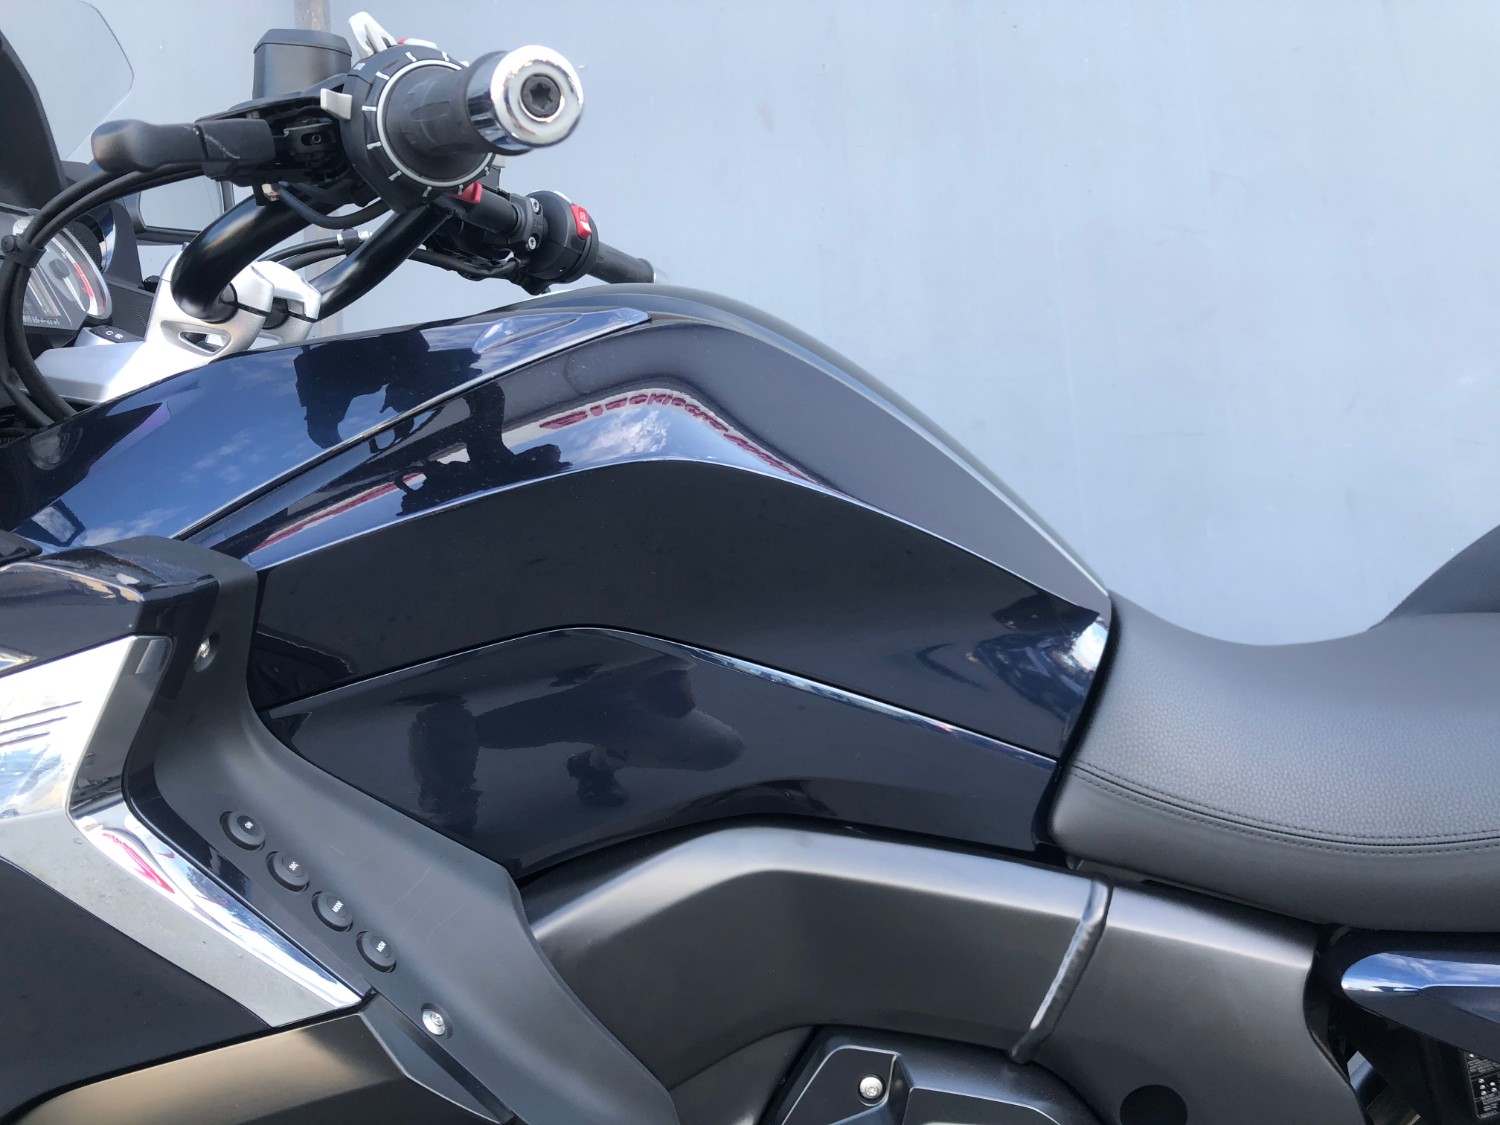 2019 BMW K1600 B Deluxe Motorcycle Image 9